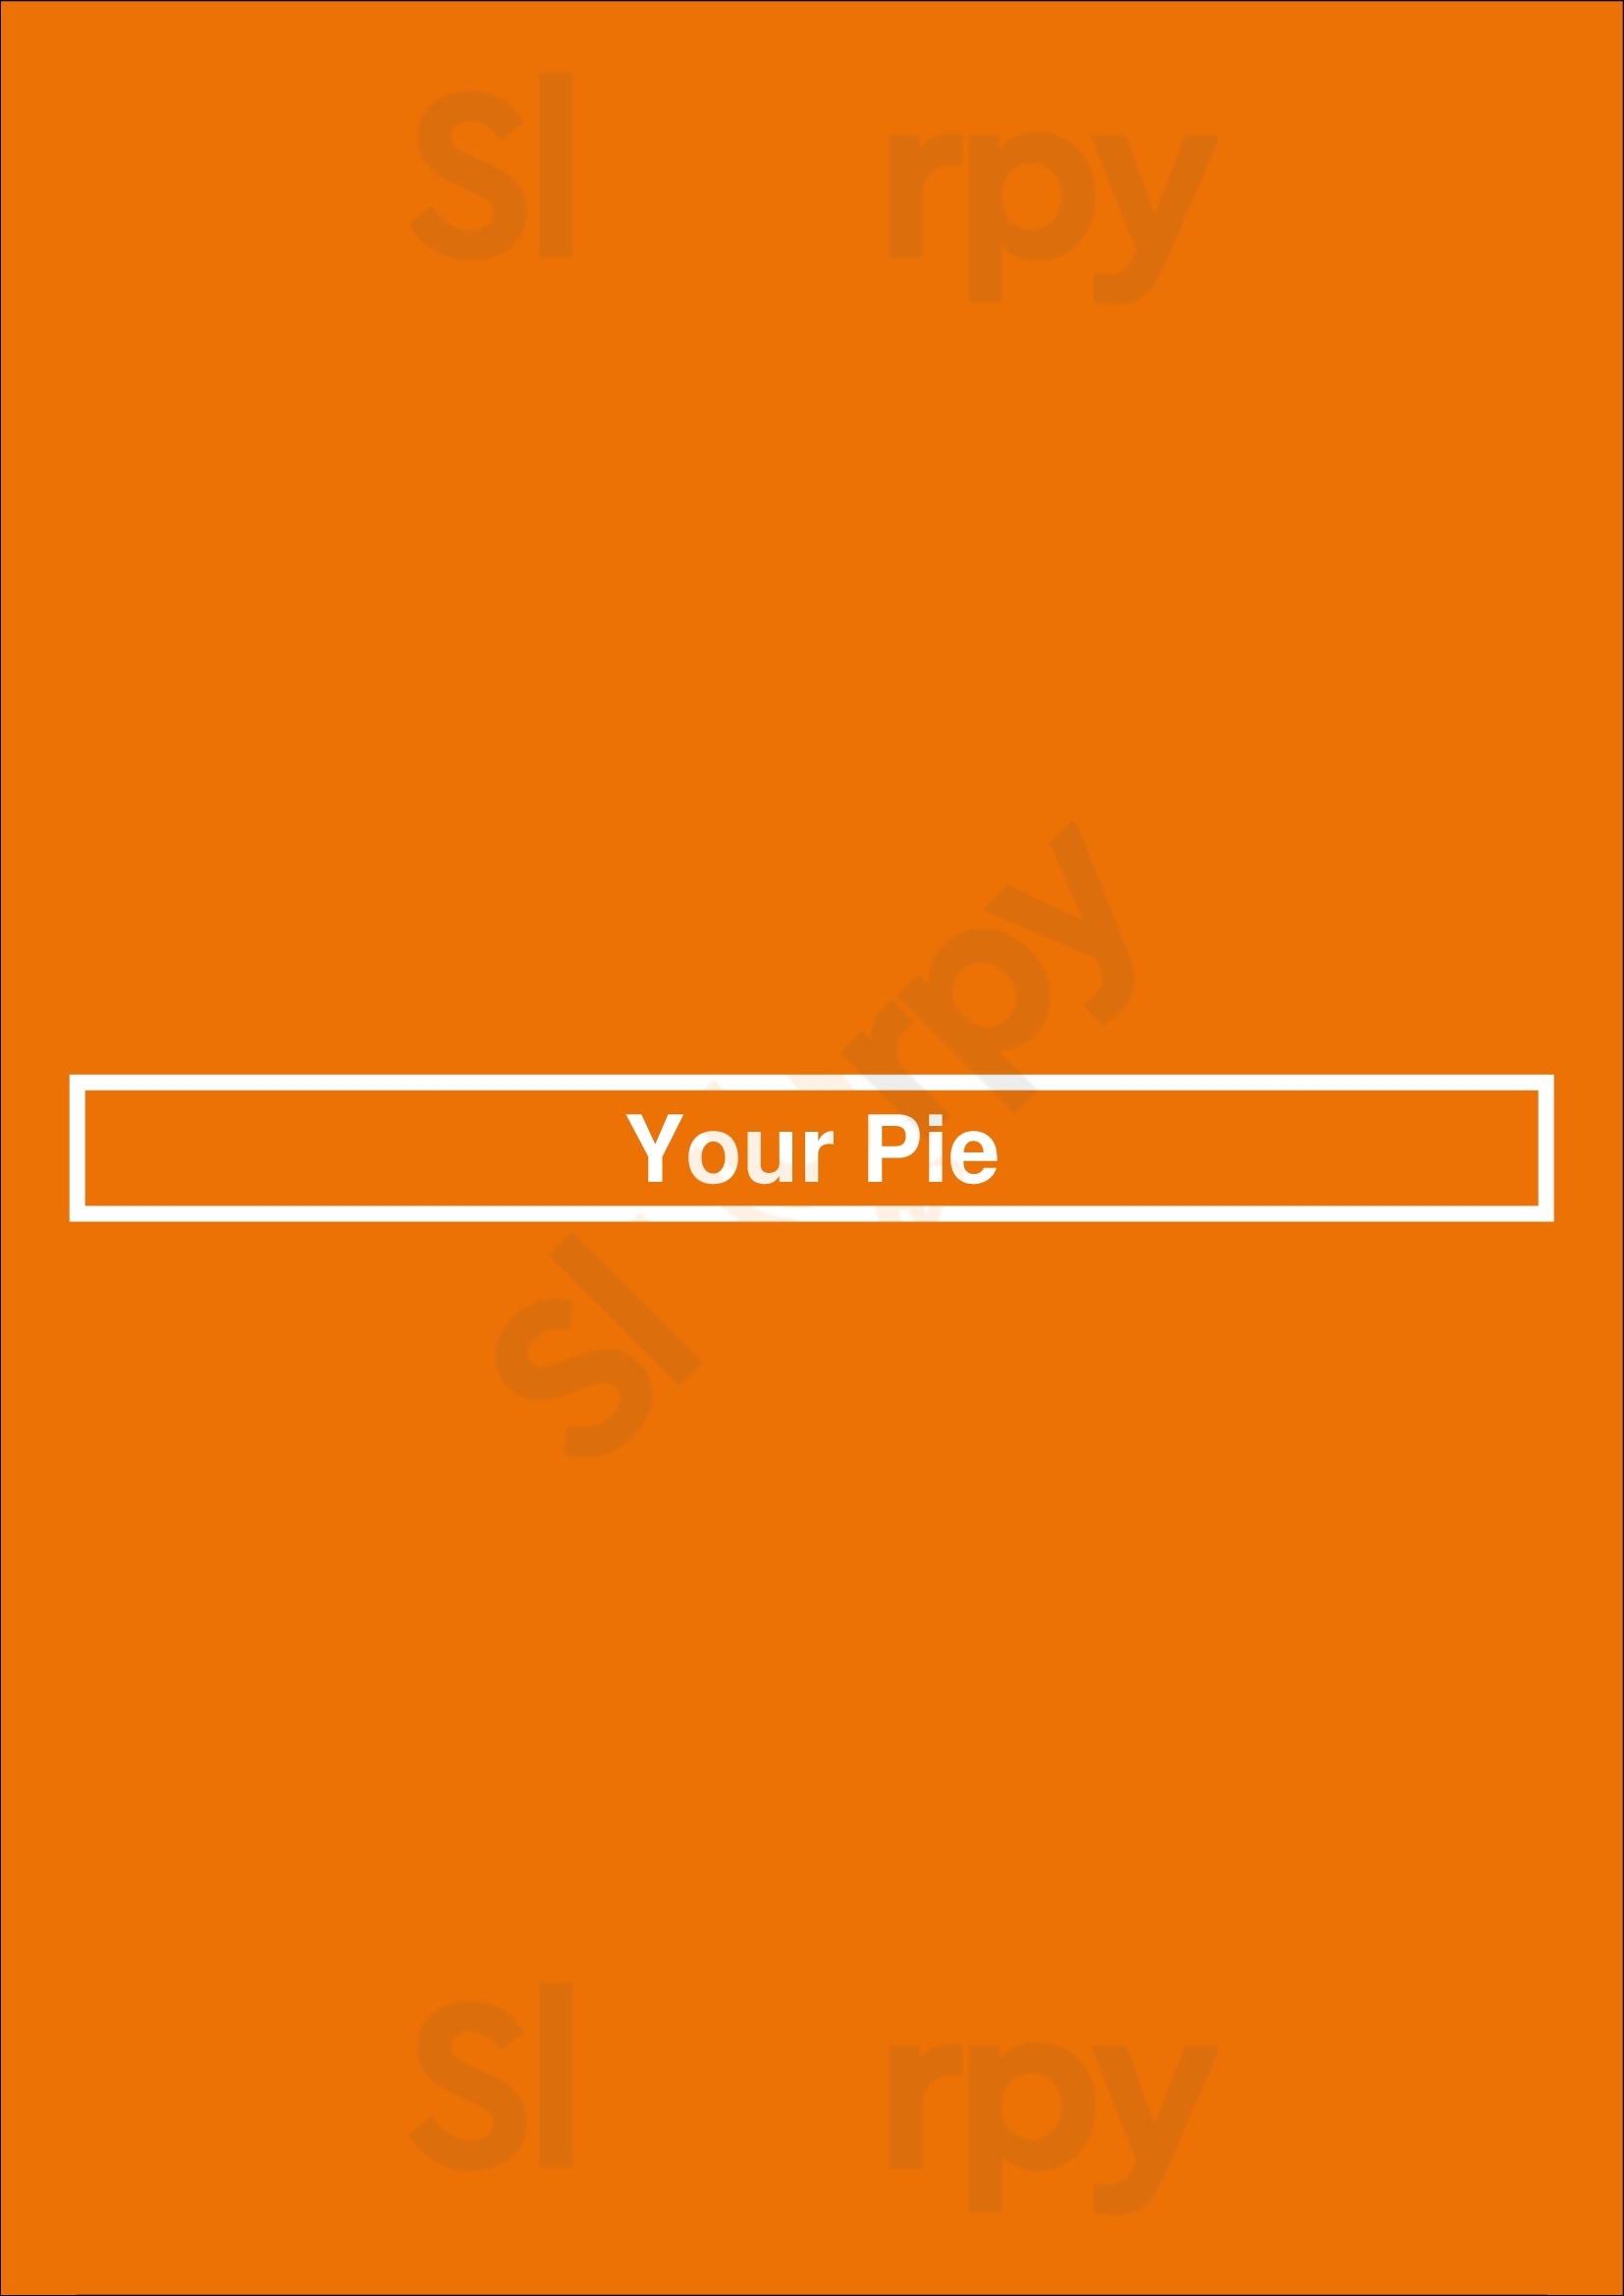 Your Pie Houston Menu - 1